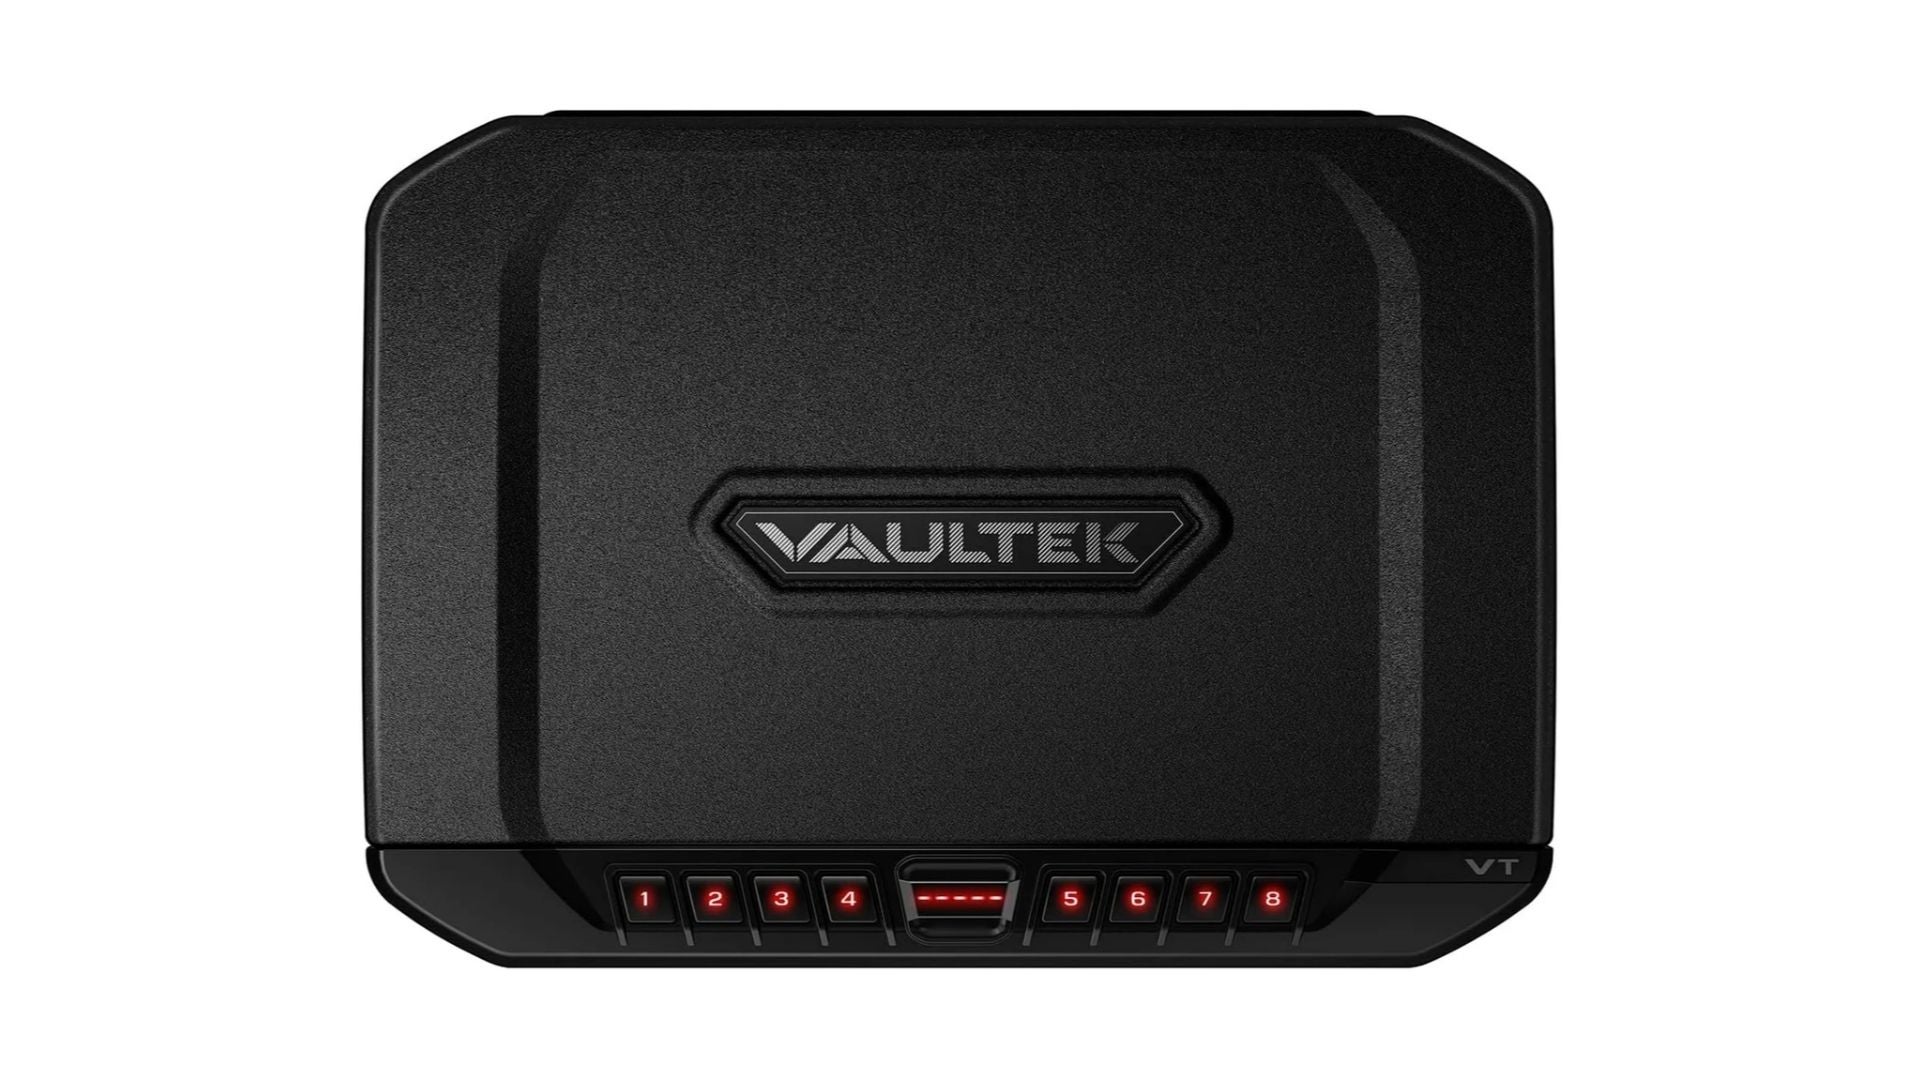 Vaultek VT Full-Size Bluetooth Smart Pistol Safe